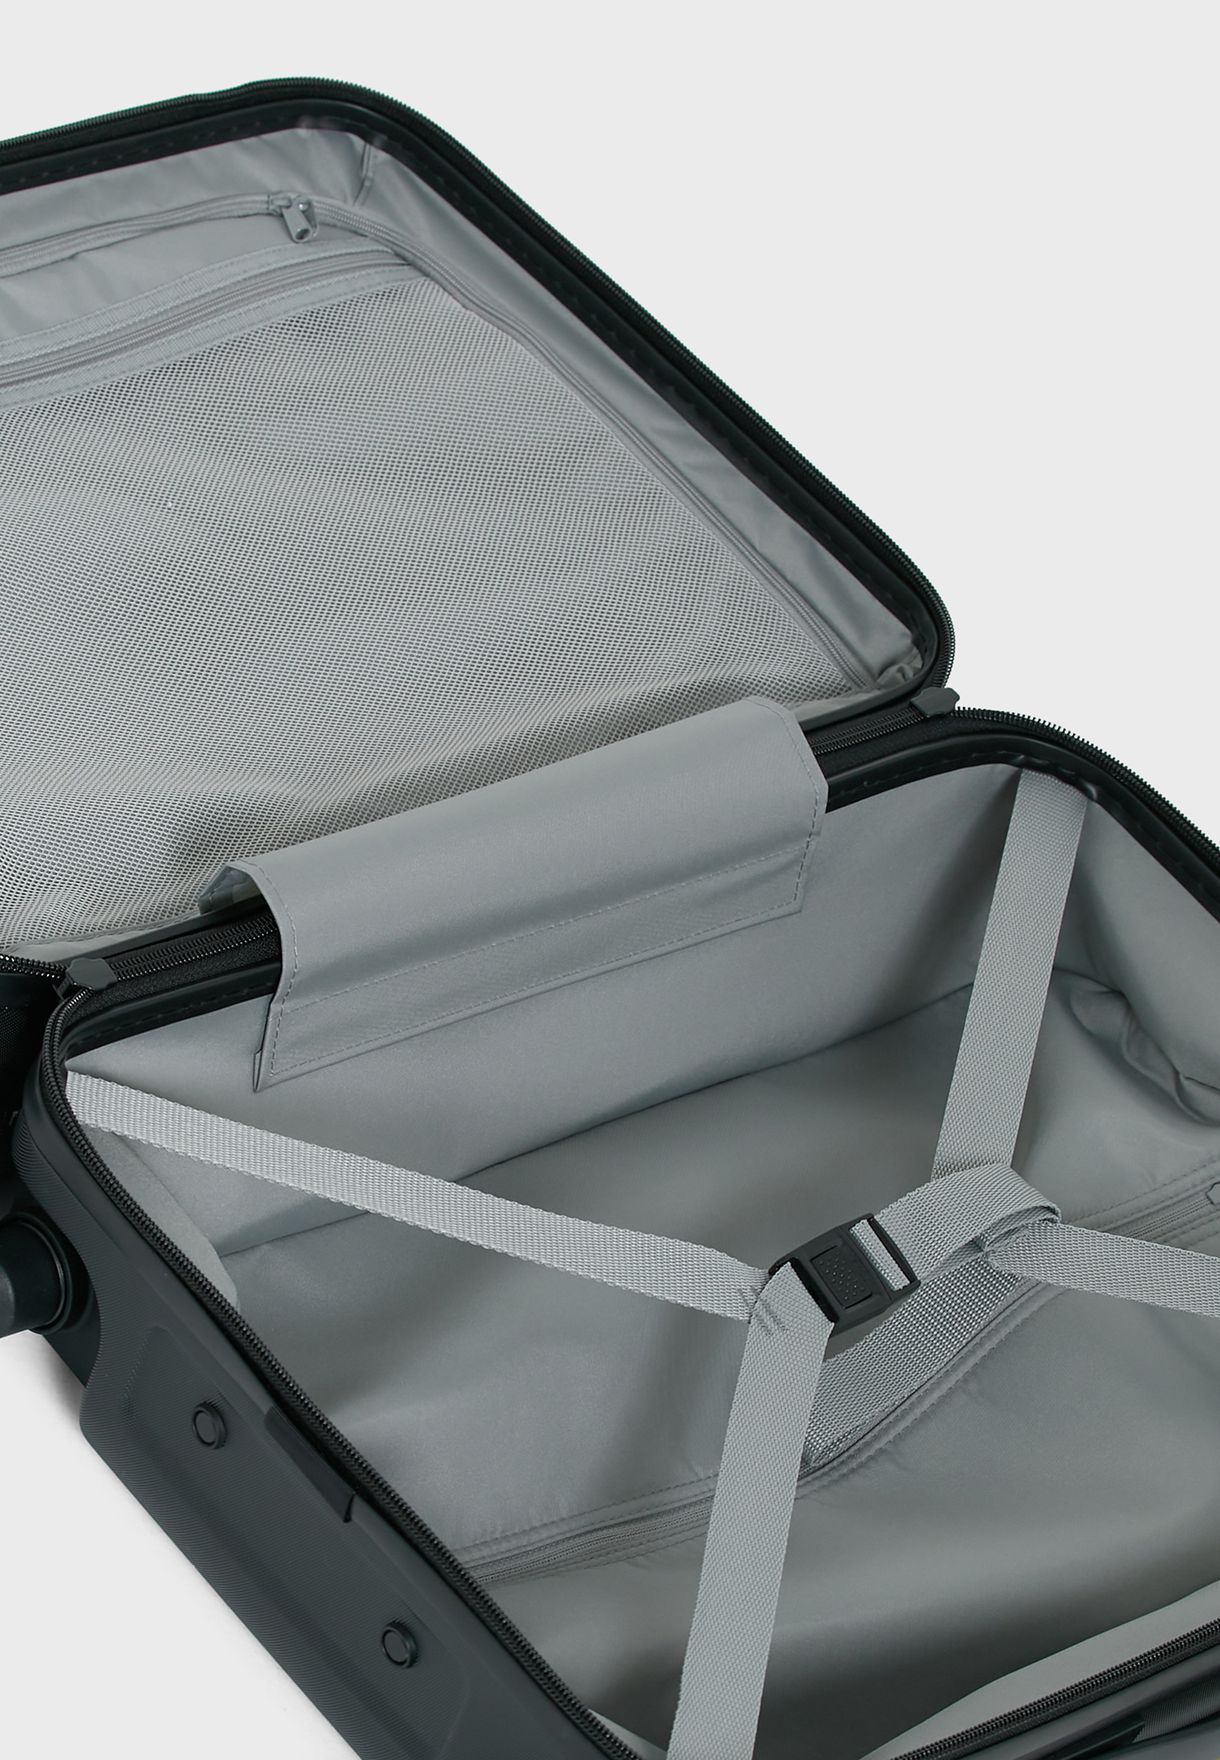 Hard Carry Suitcase(36L)